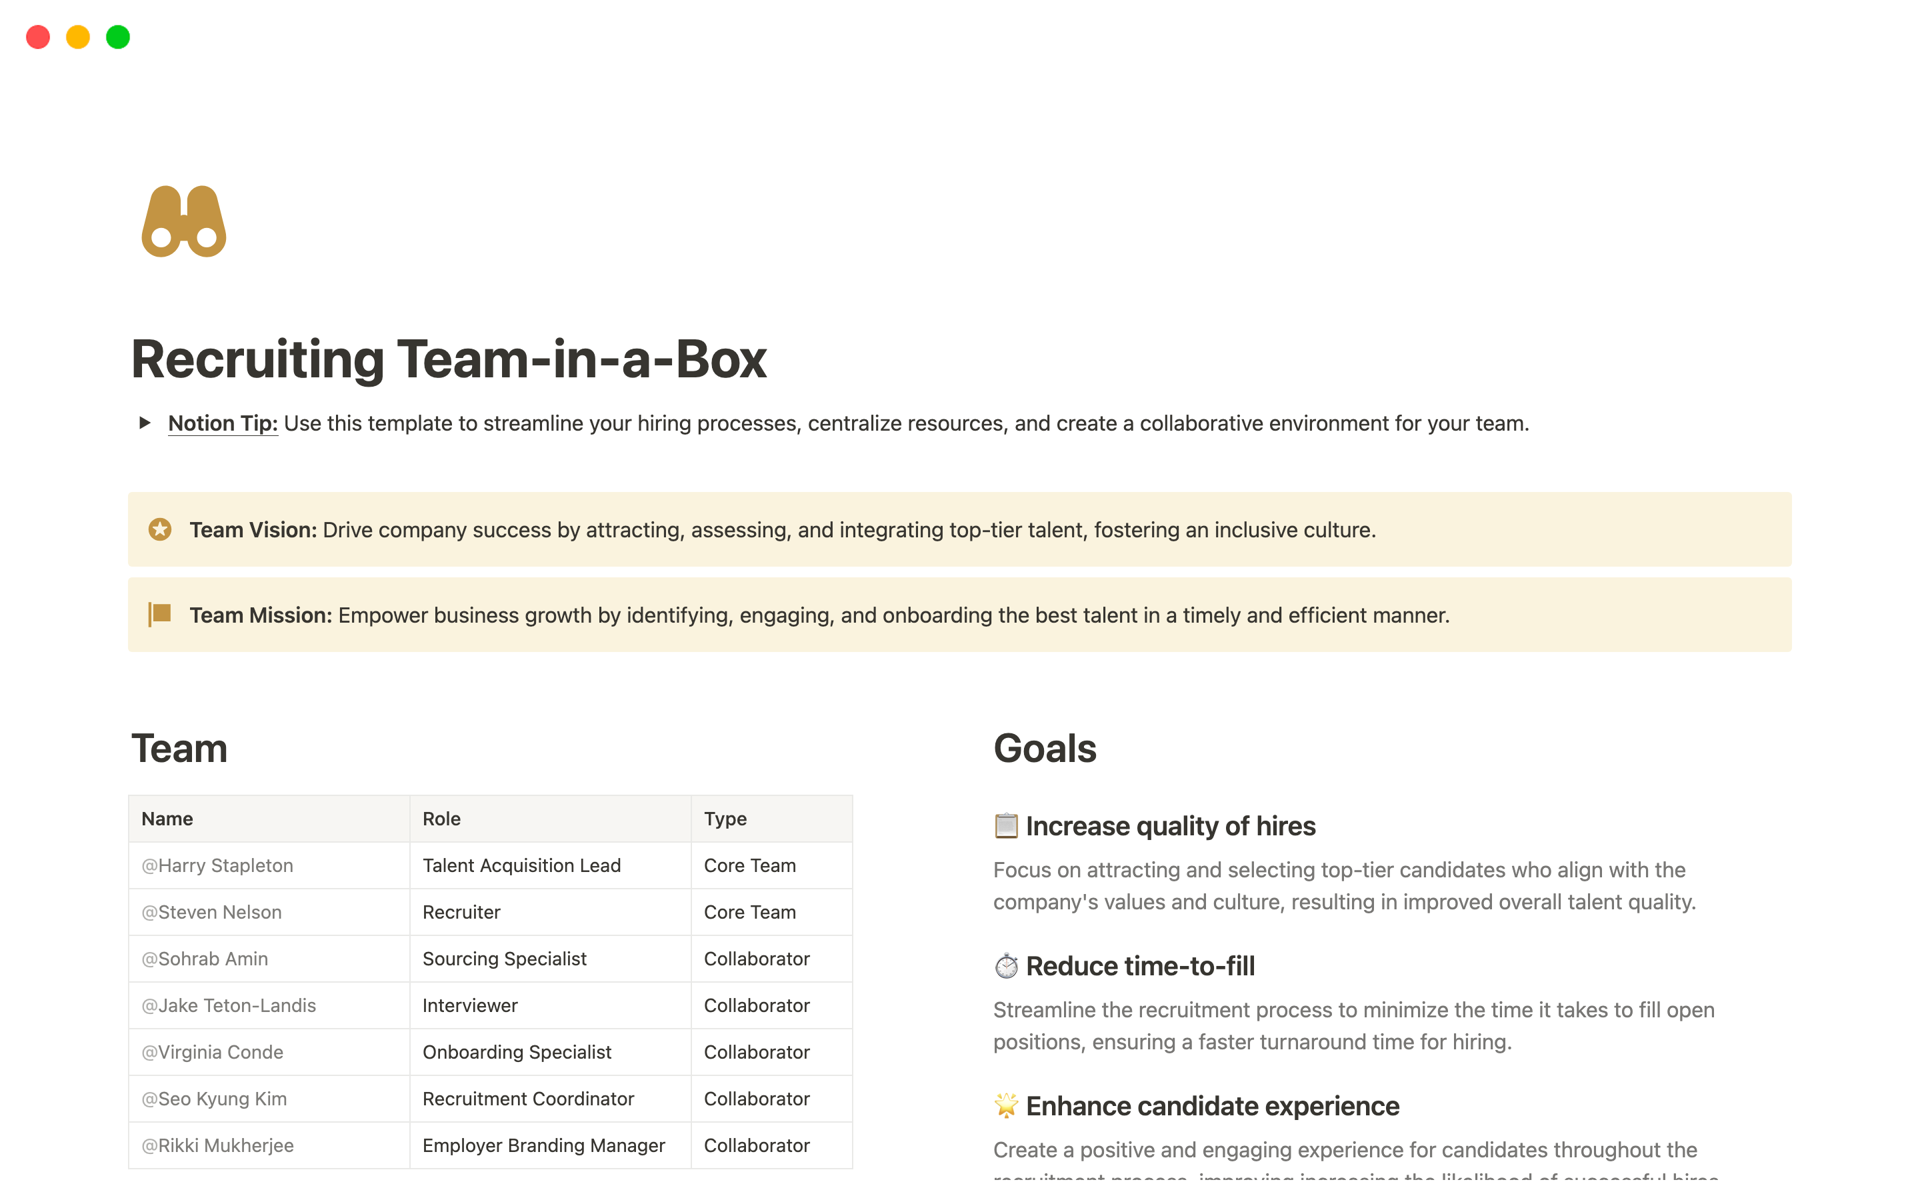 Vista previa de una plantilla para Recruiting Team in-a-Box